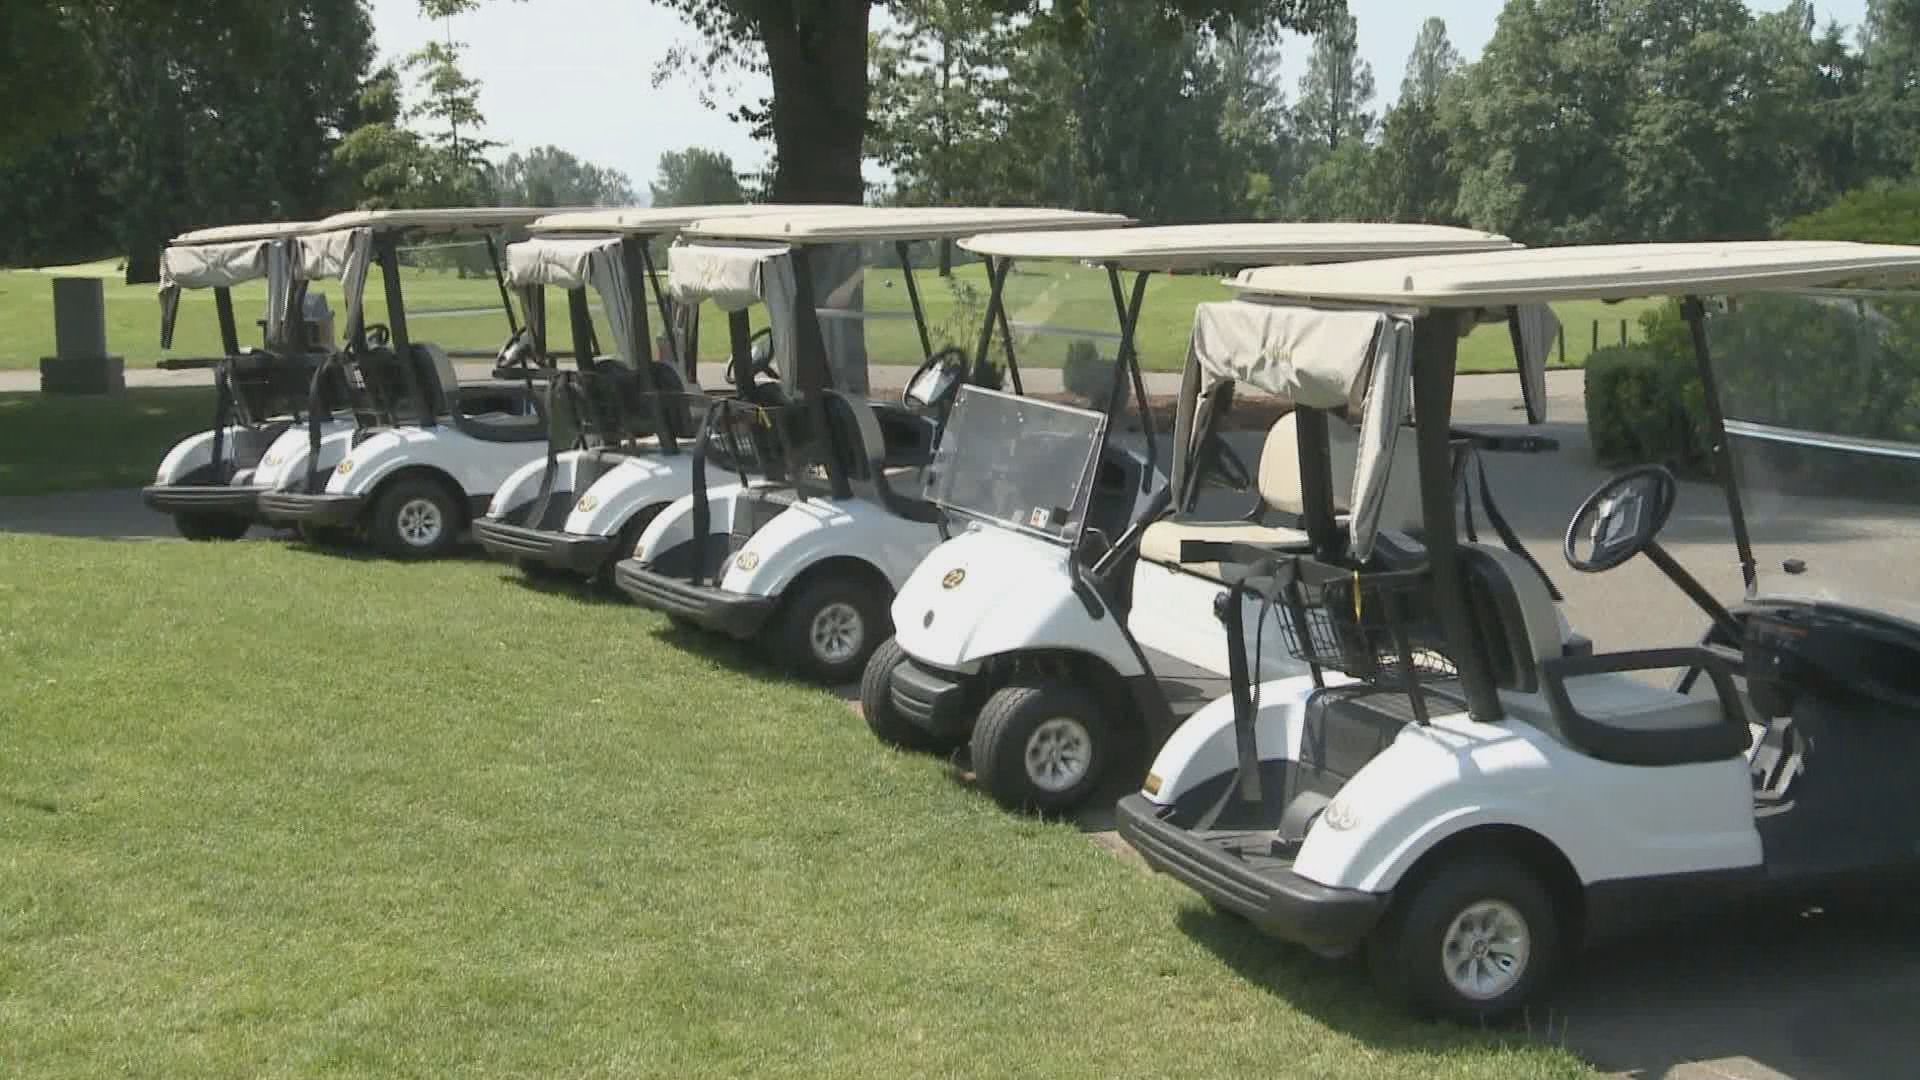 https://globalnews.ca/wp-content/uploads/2019/09/golf-carts.jpg